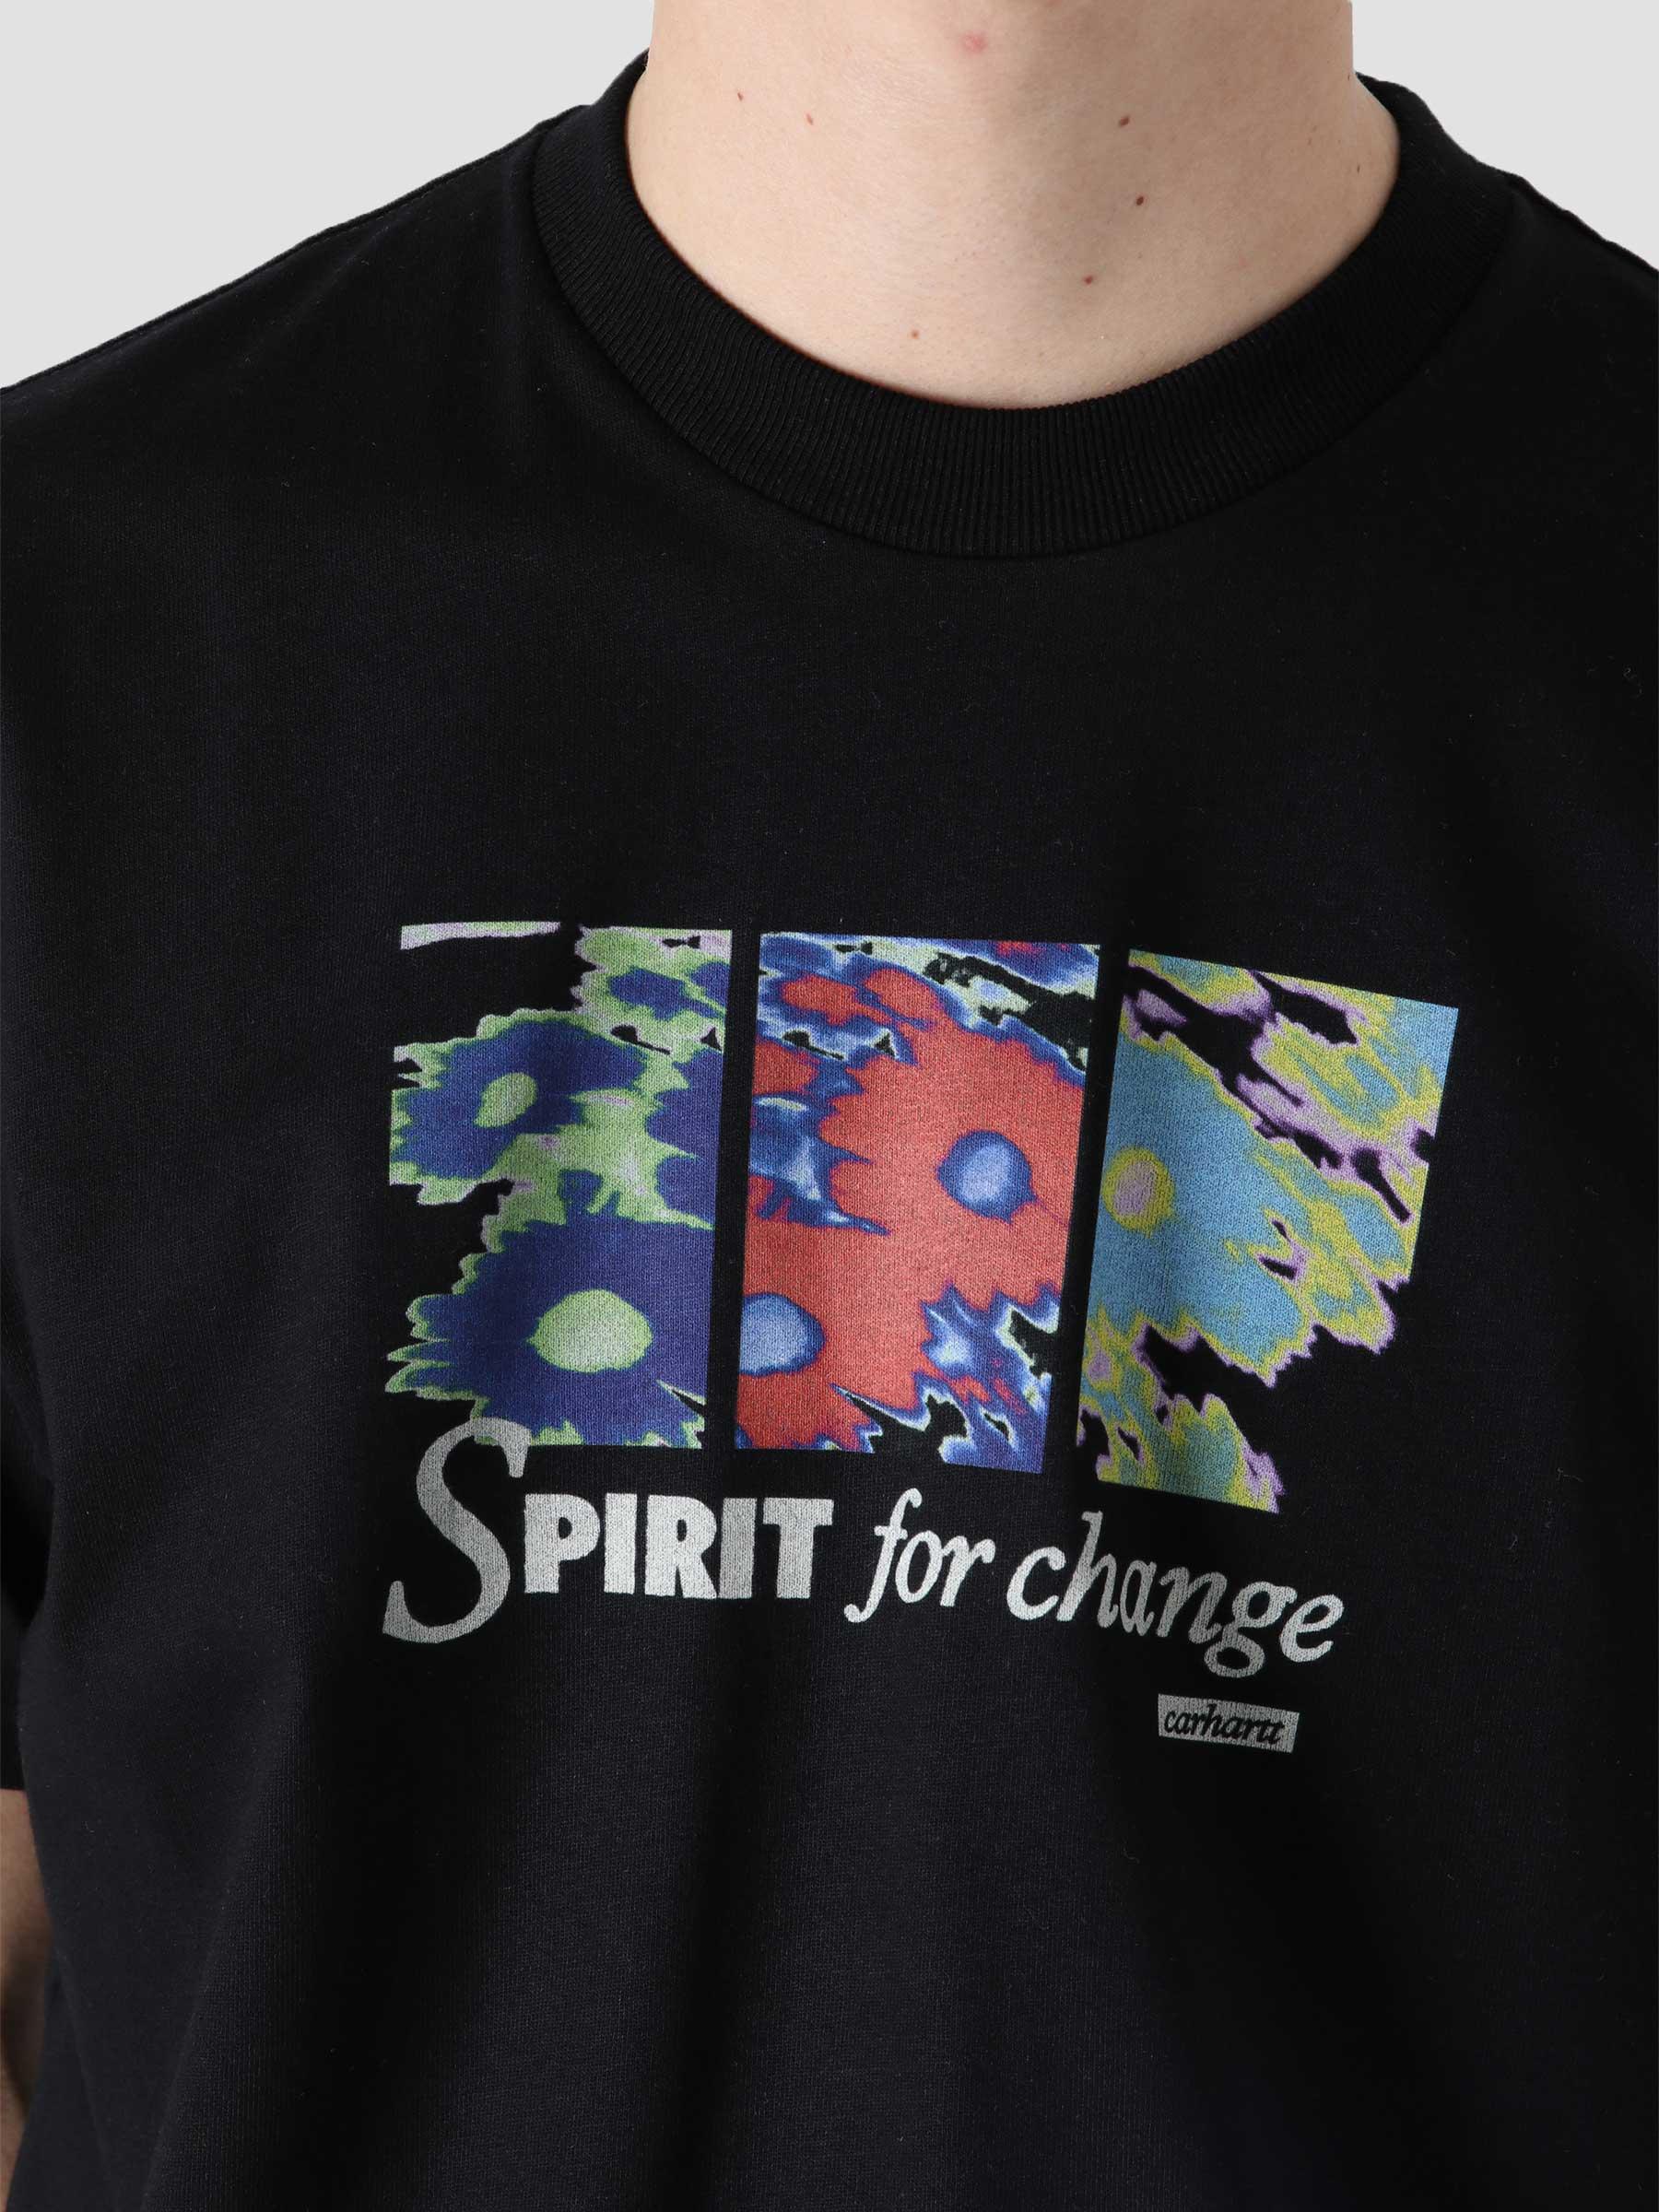 S/S Spirit T-Shirt Black